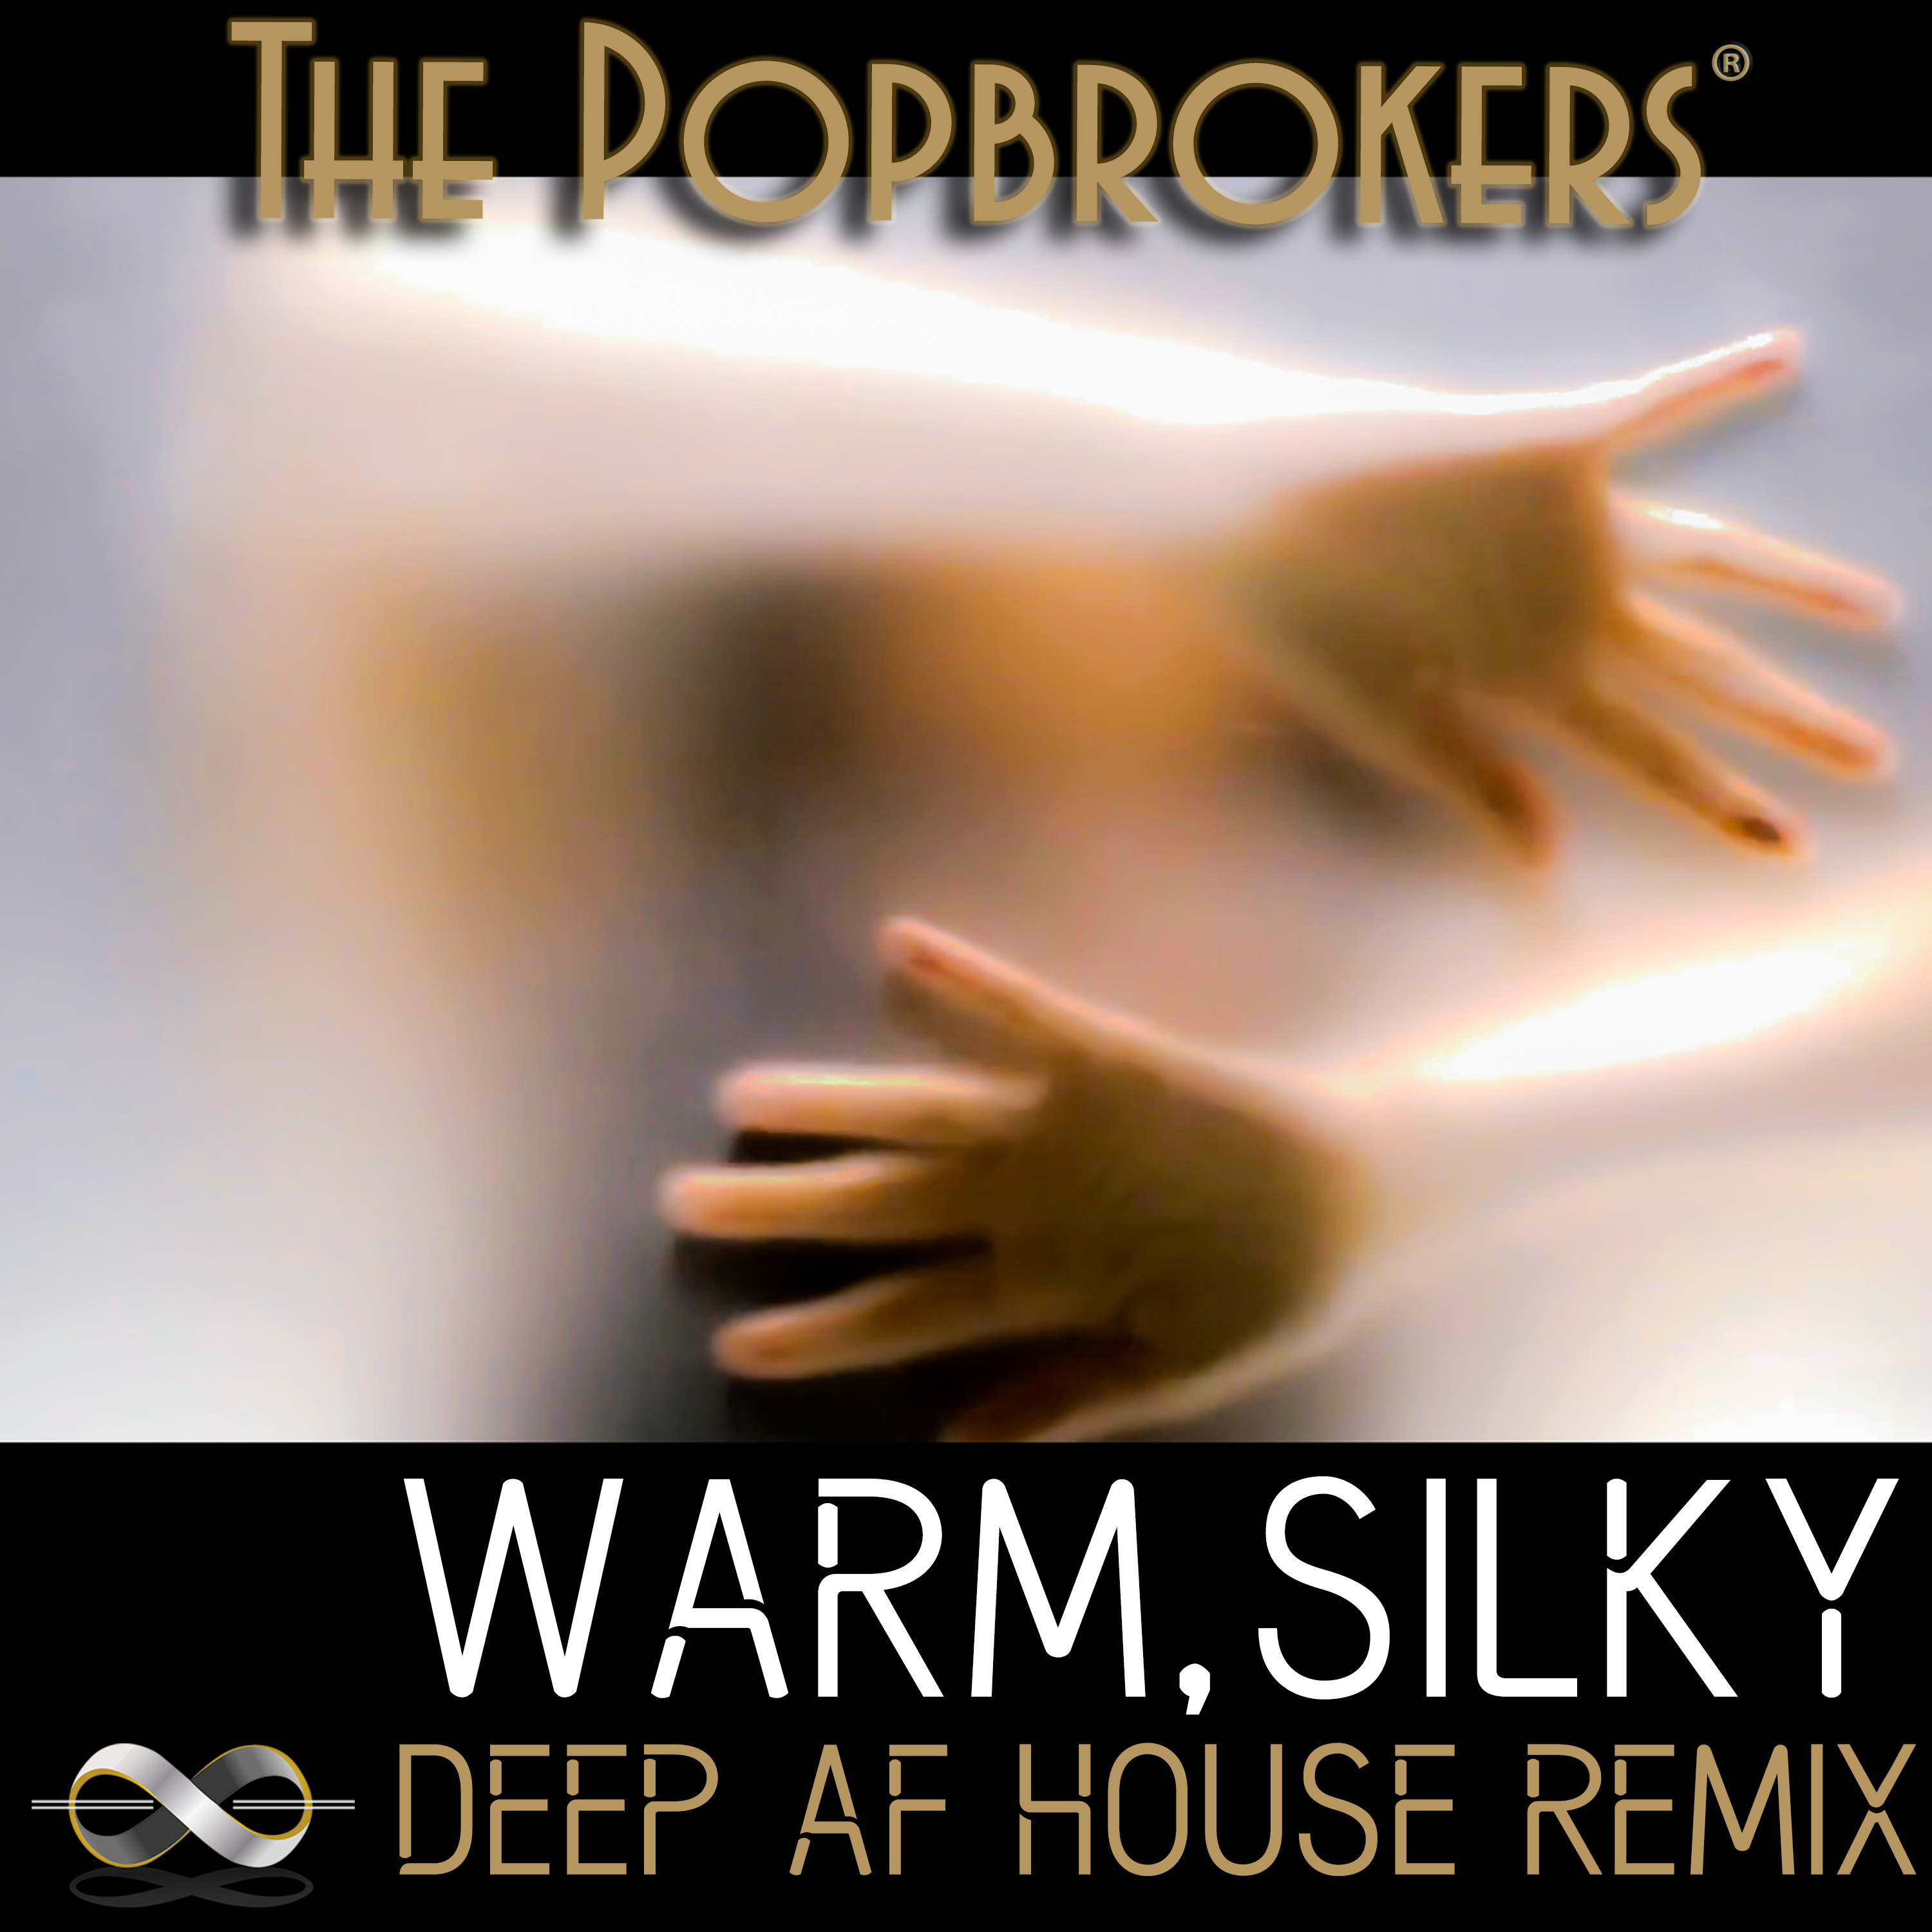 The PopBrokers - Warm, Silky (Deep AF House Remix) (2020) постер